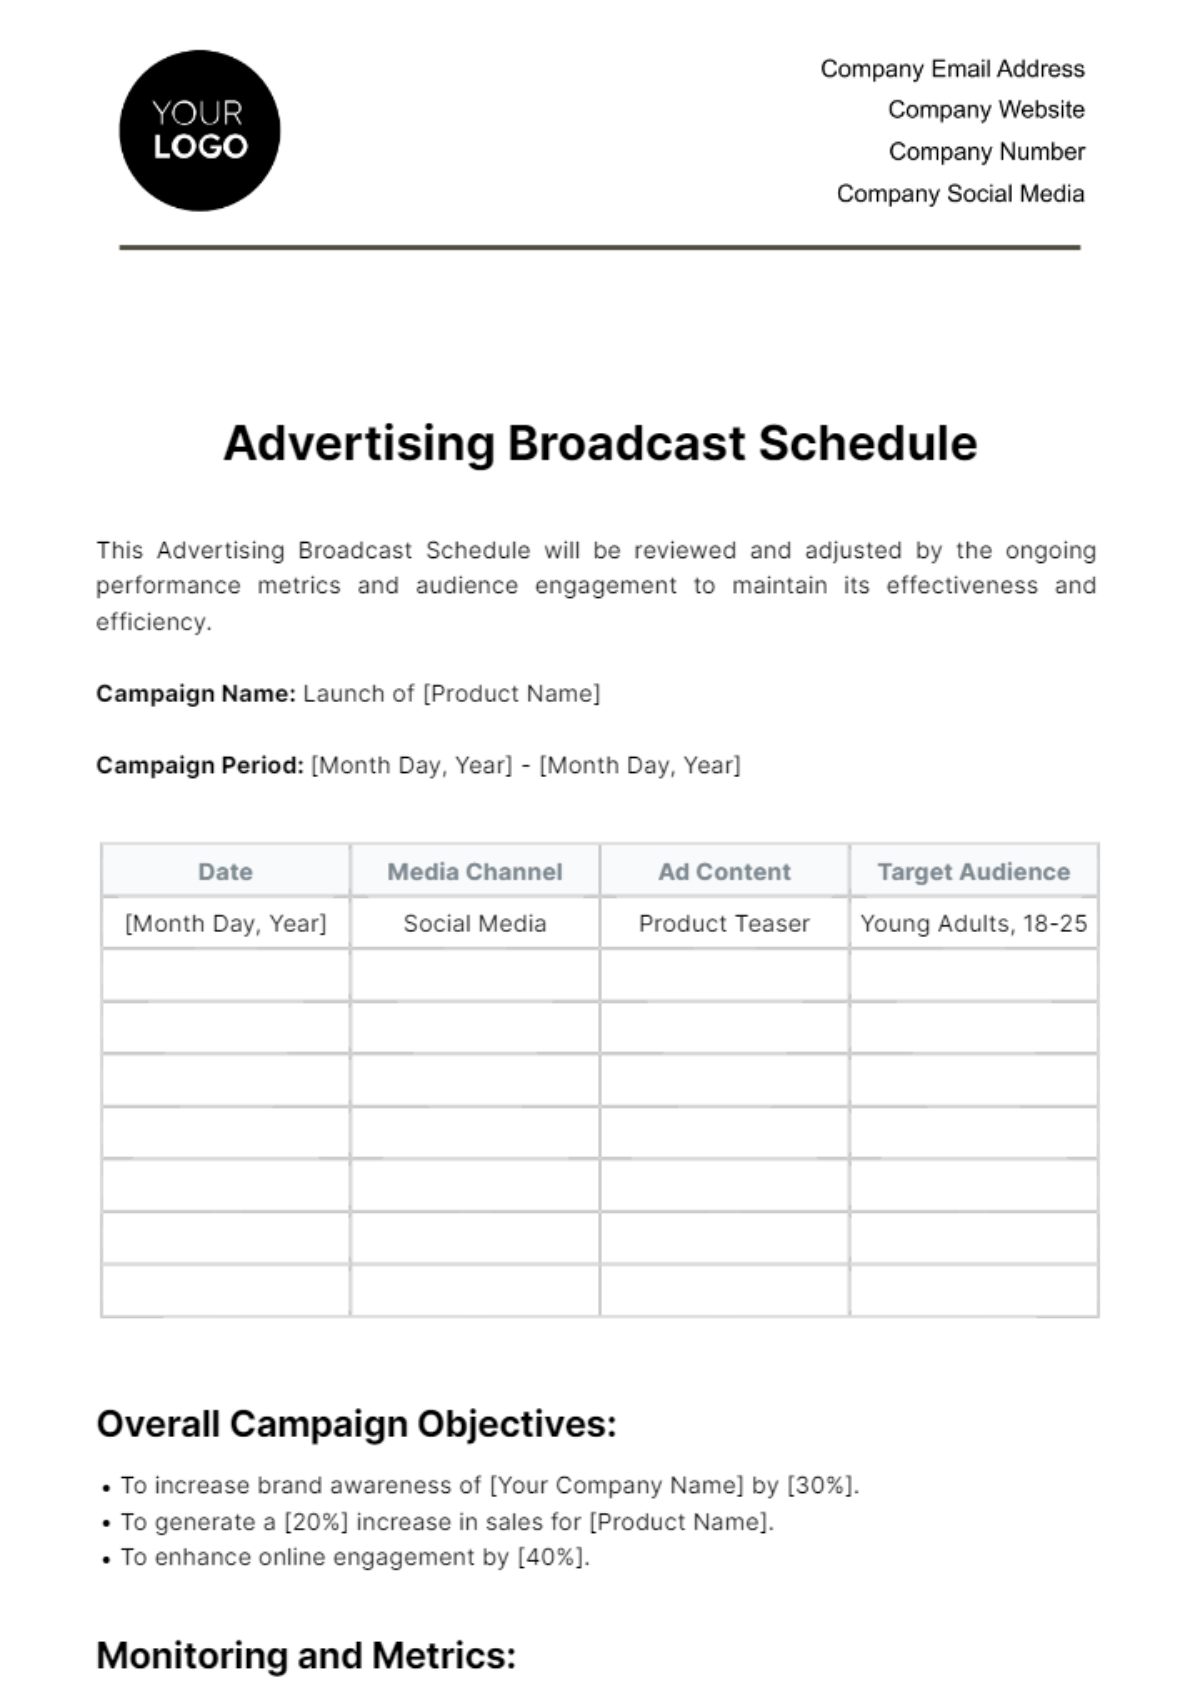 Advertising Broadcast Schedule Template